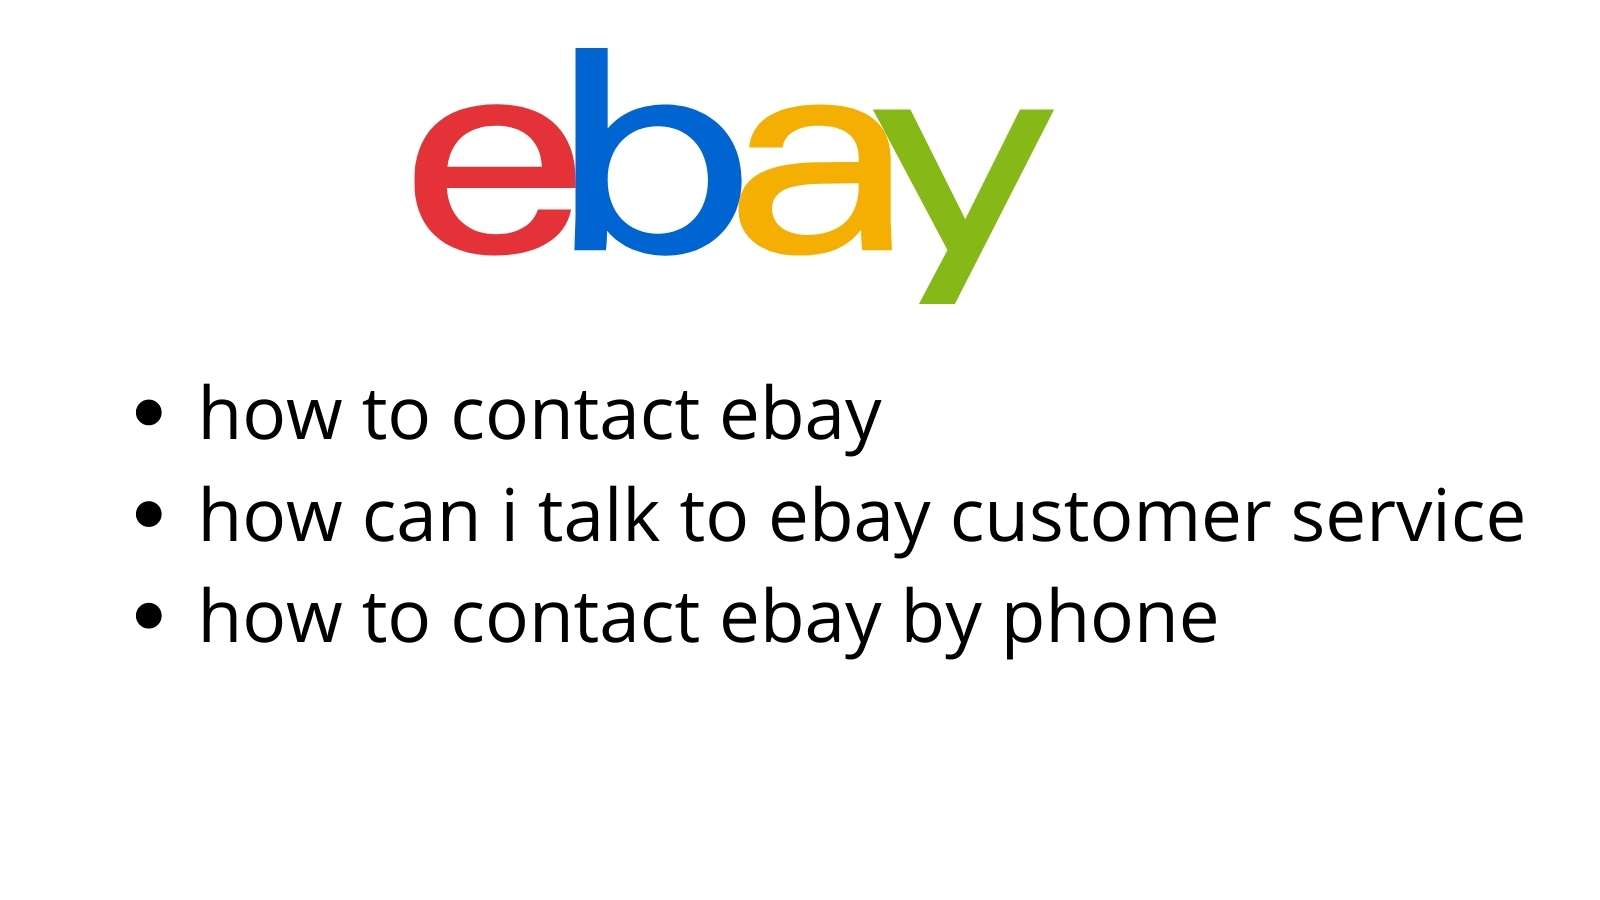 How can i talk to ebay customer service